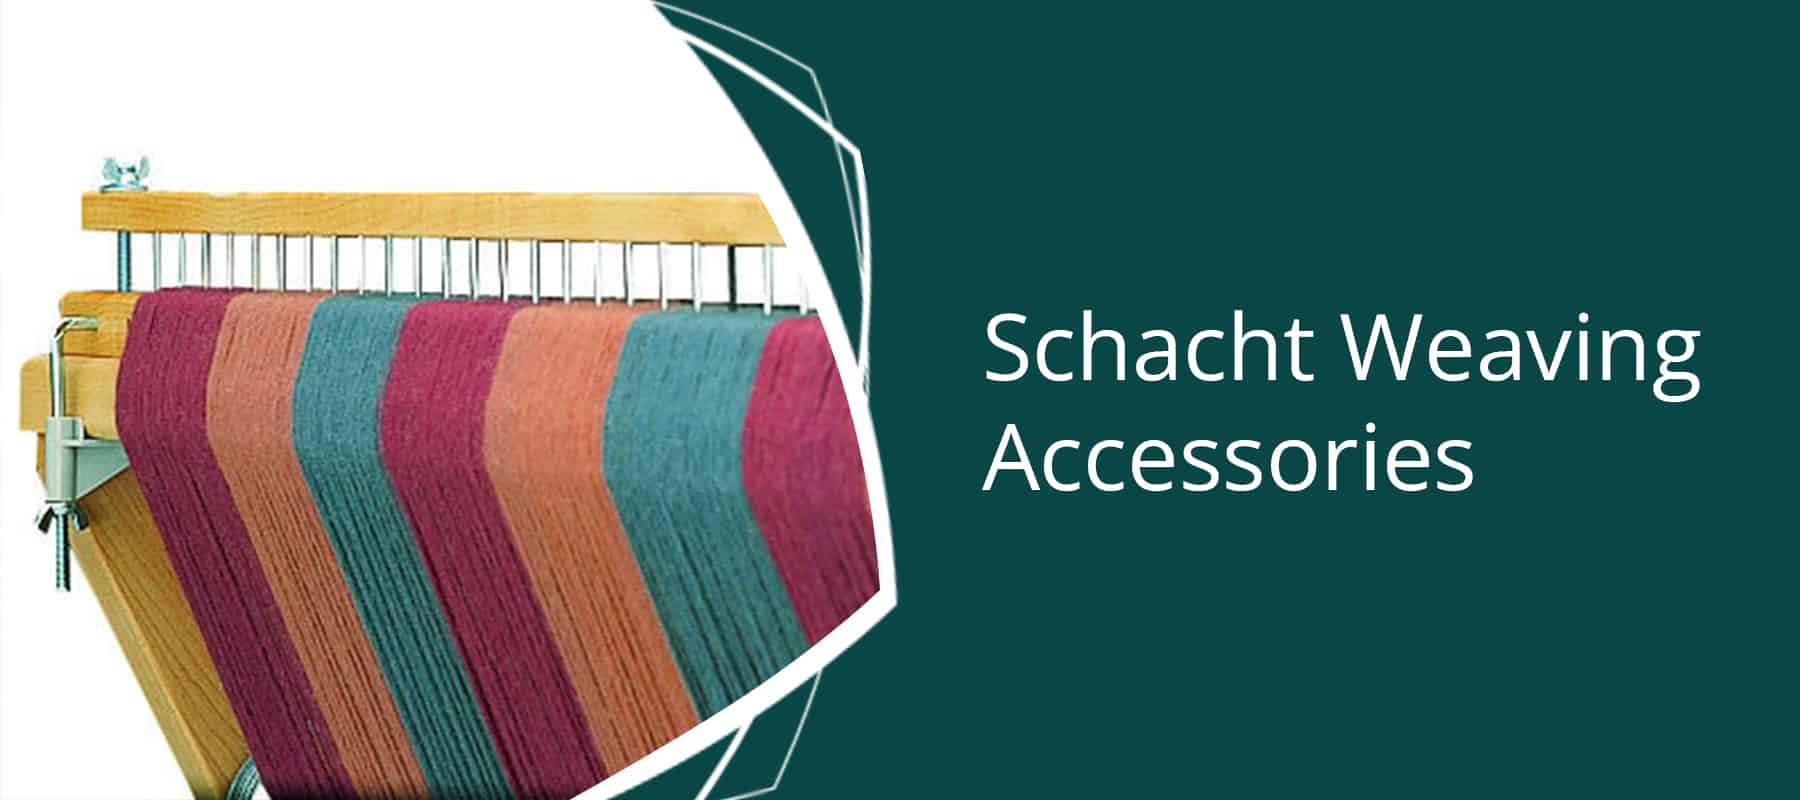 Schacht Weaving Accessories - Thread Collective Australia